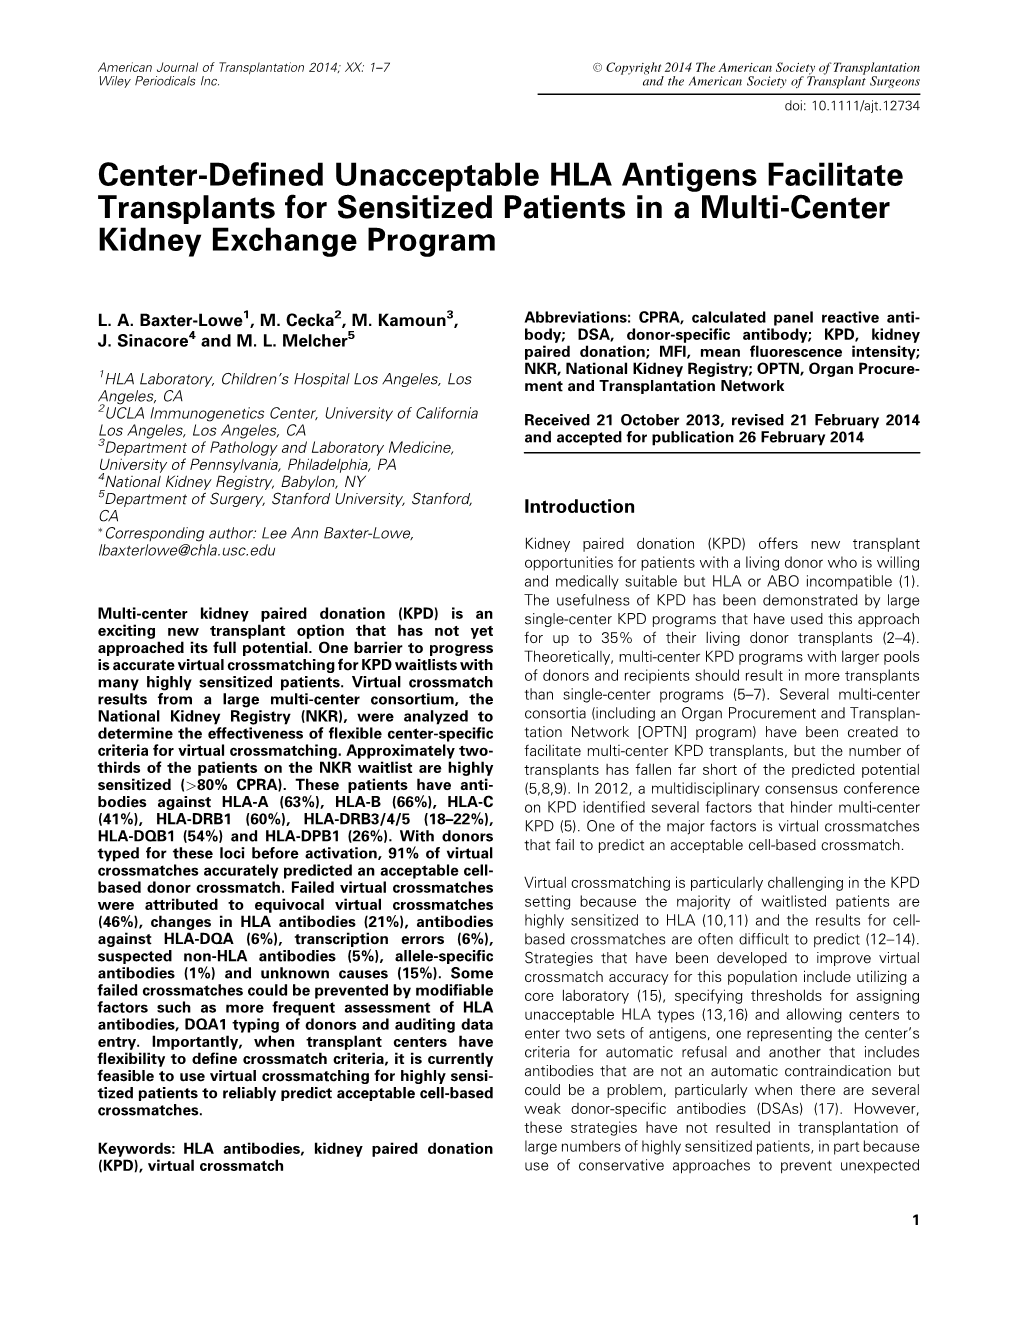 Center-Defined Unacceptable HLA Antigens Facilitate Transplants